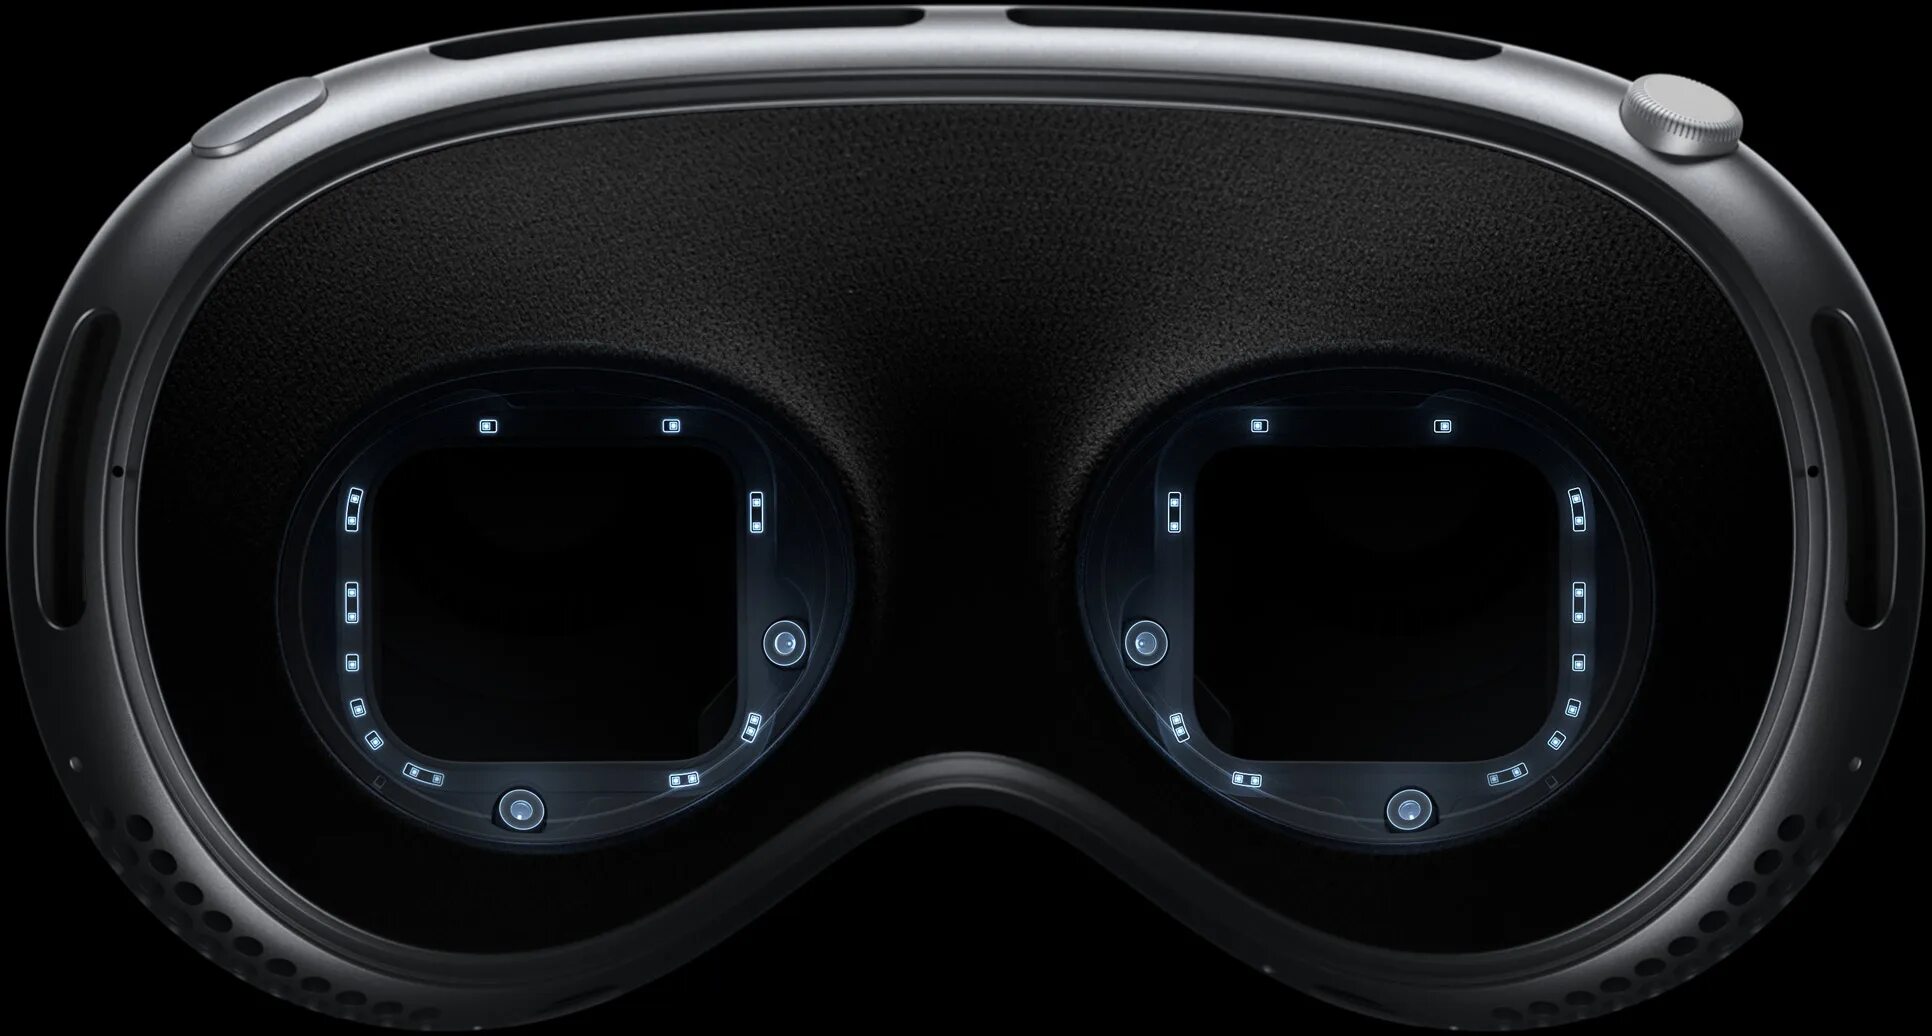 Vr vision pro. Apple vidion Pro 2. Очки виртуальной реальности Эппл. Apple Vision Pro VR and ar. Ar очки от Apple Apple Vision Pro.